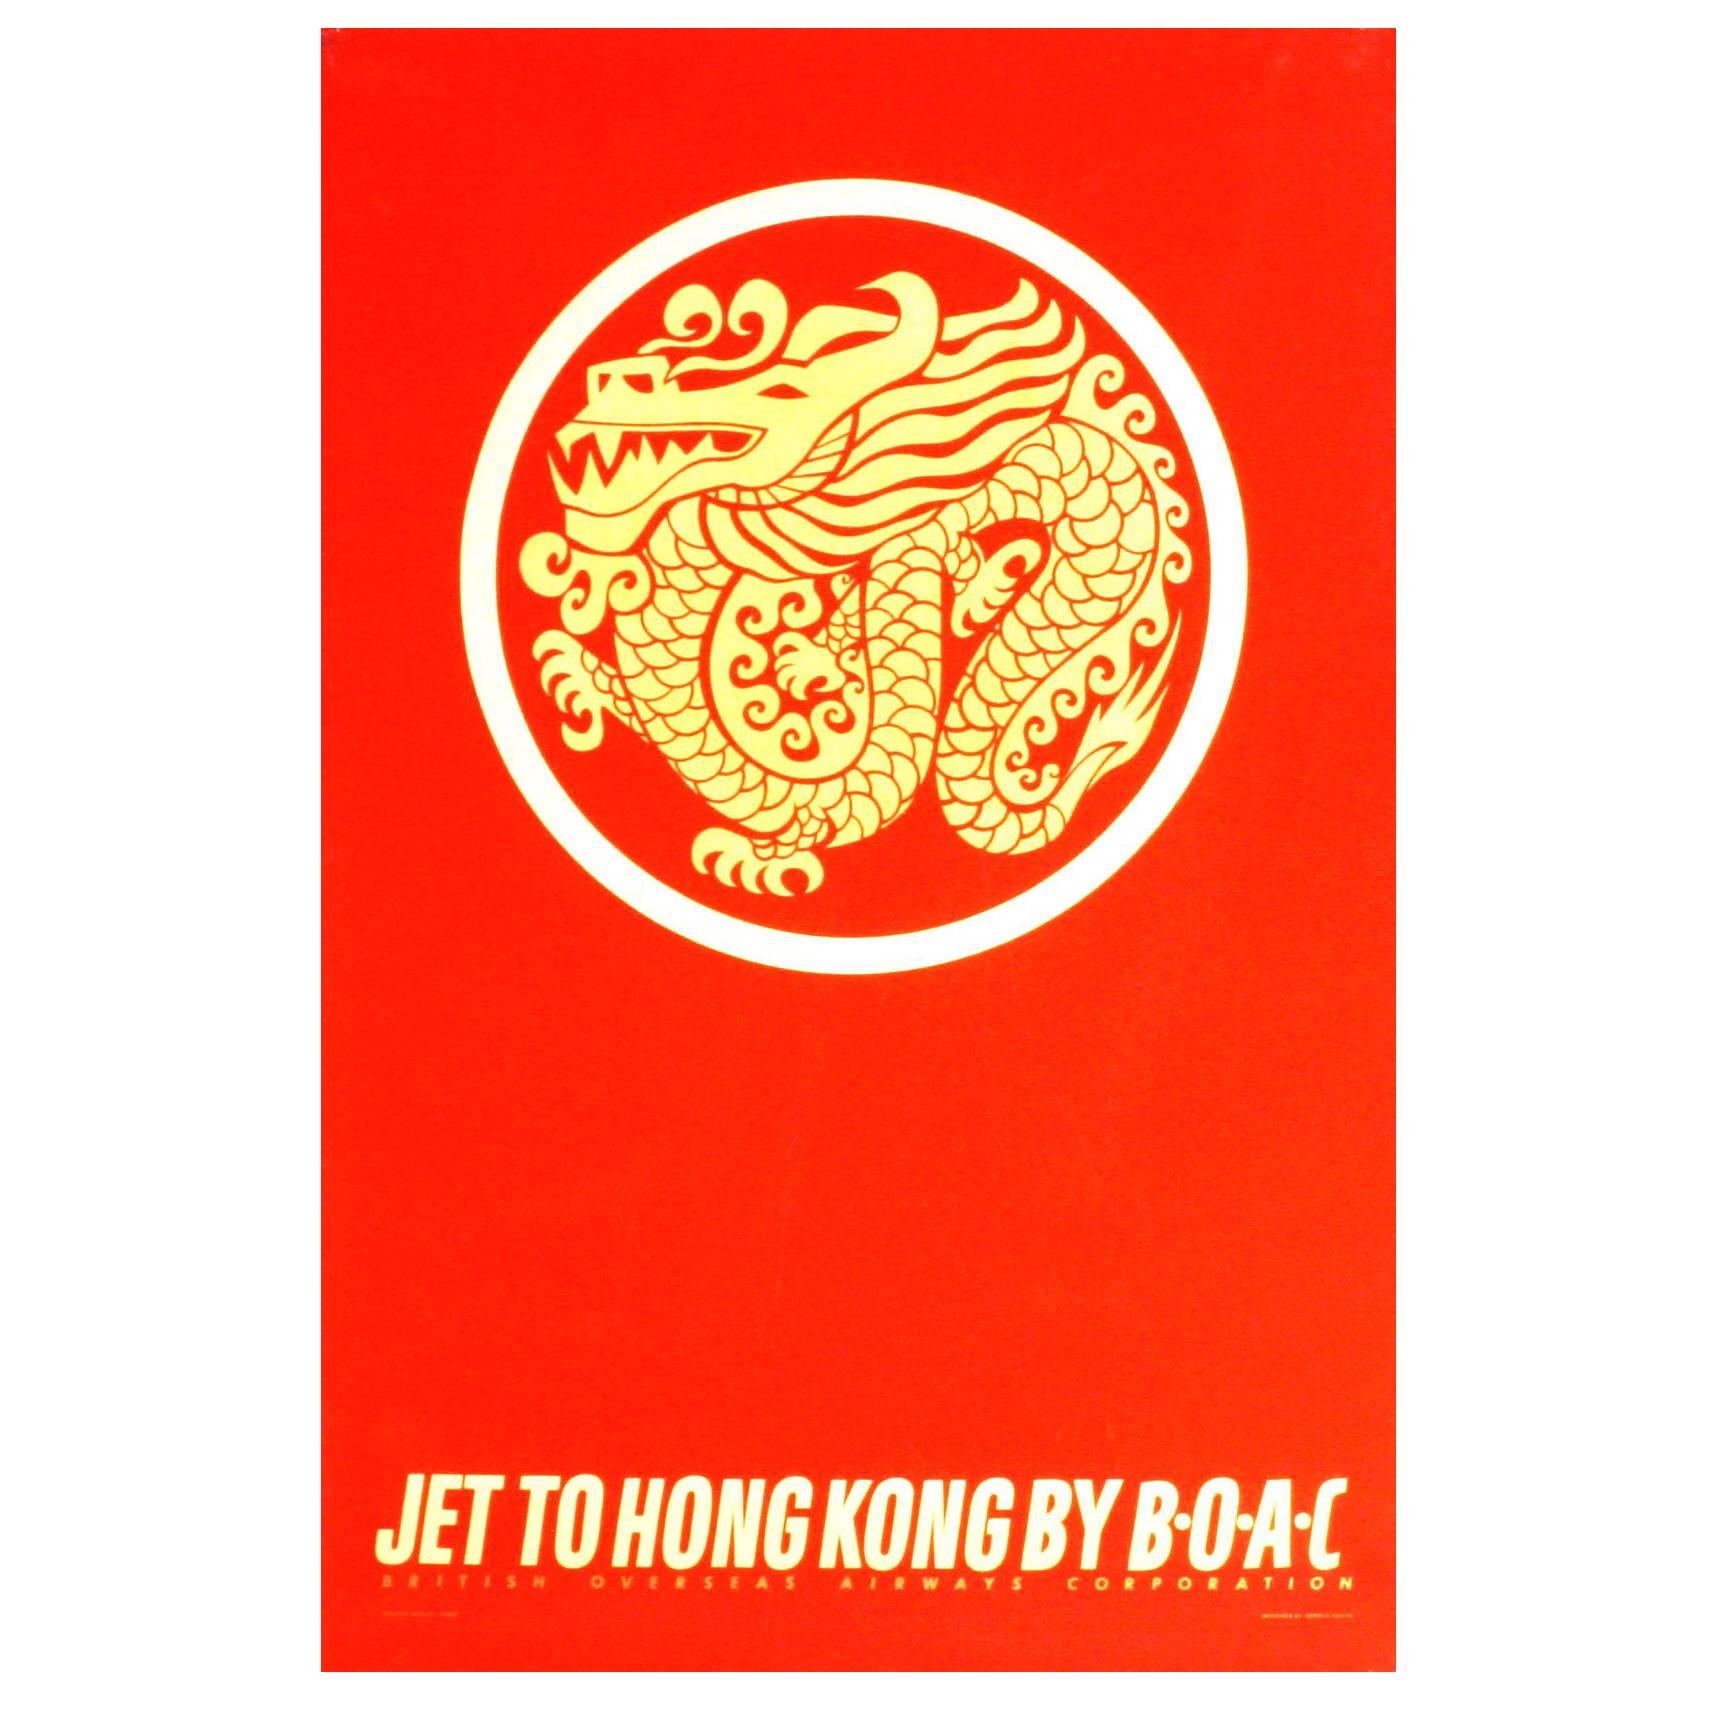 Original Vintage 1960s Travel Advertising Poster "Jet to Hong Kong By BOAC"